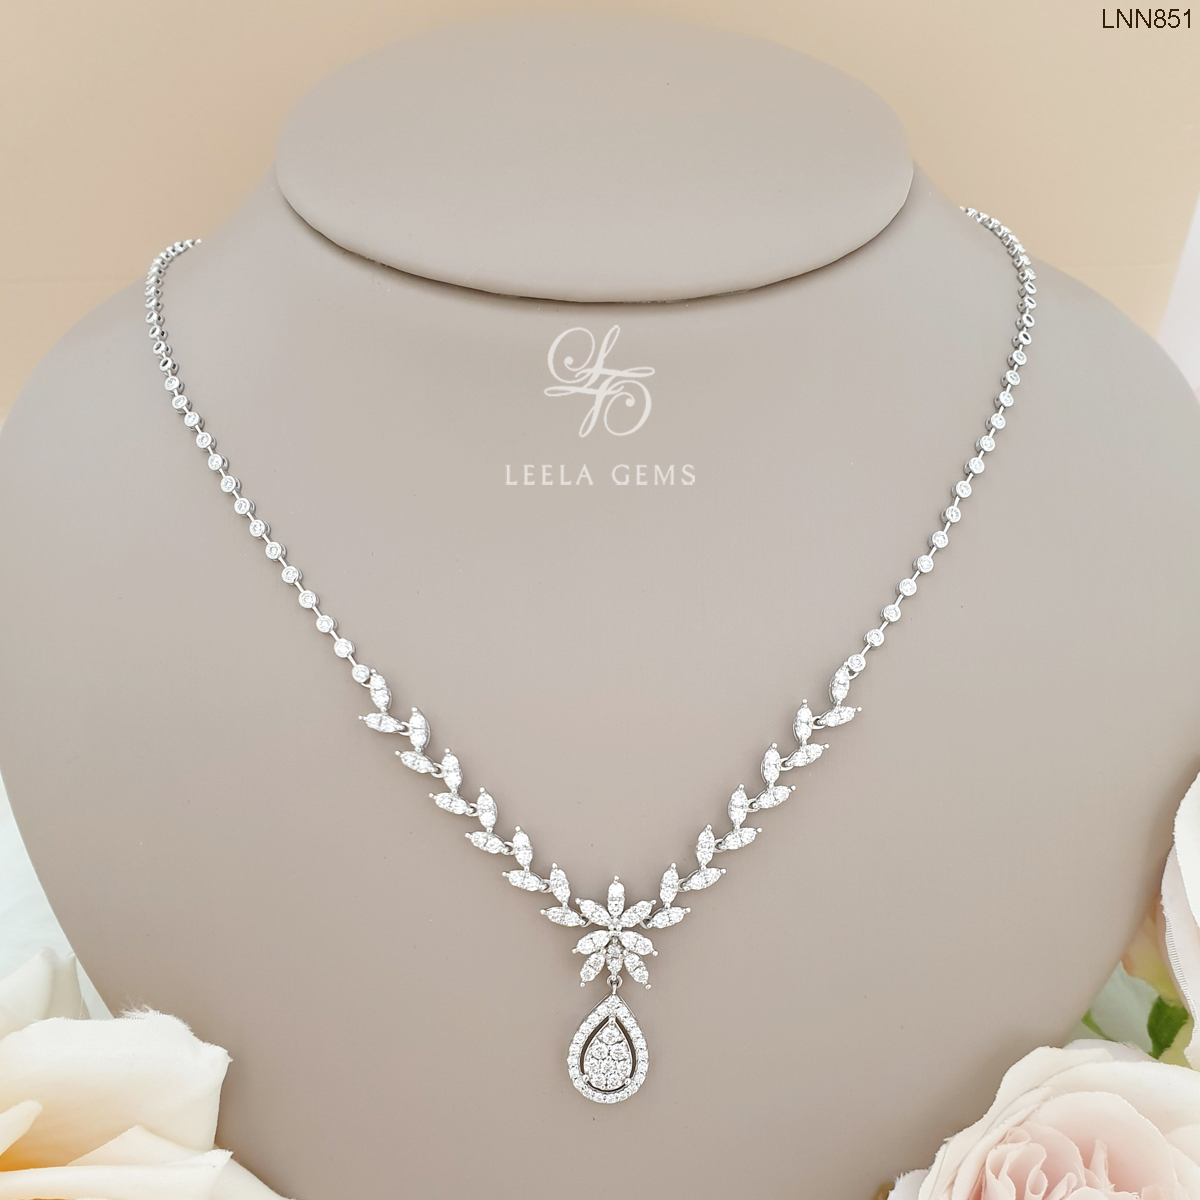 Diamond Necklace with detachable pendant